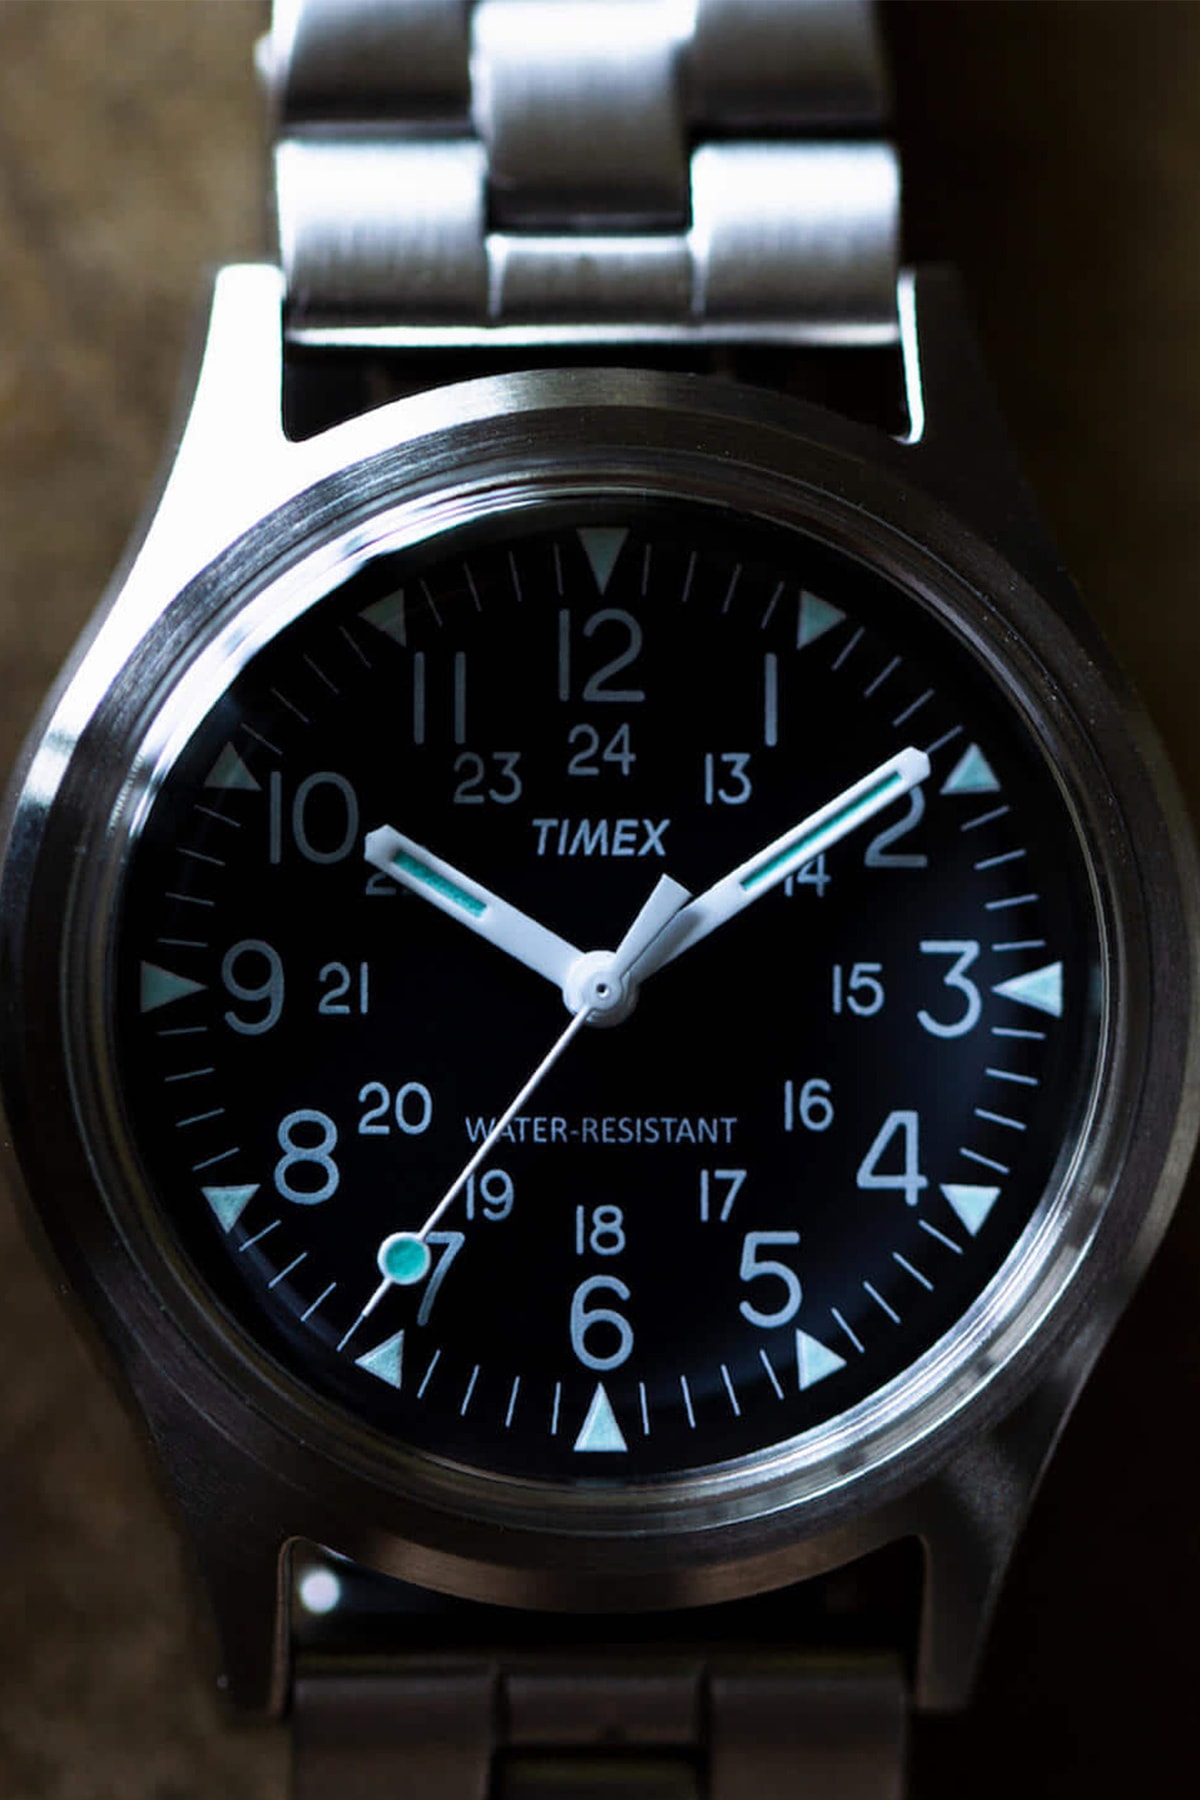 BEAMS x TIMEX 全新聯乘 CAMPER 不鏽鋼定製錶款發佈